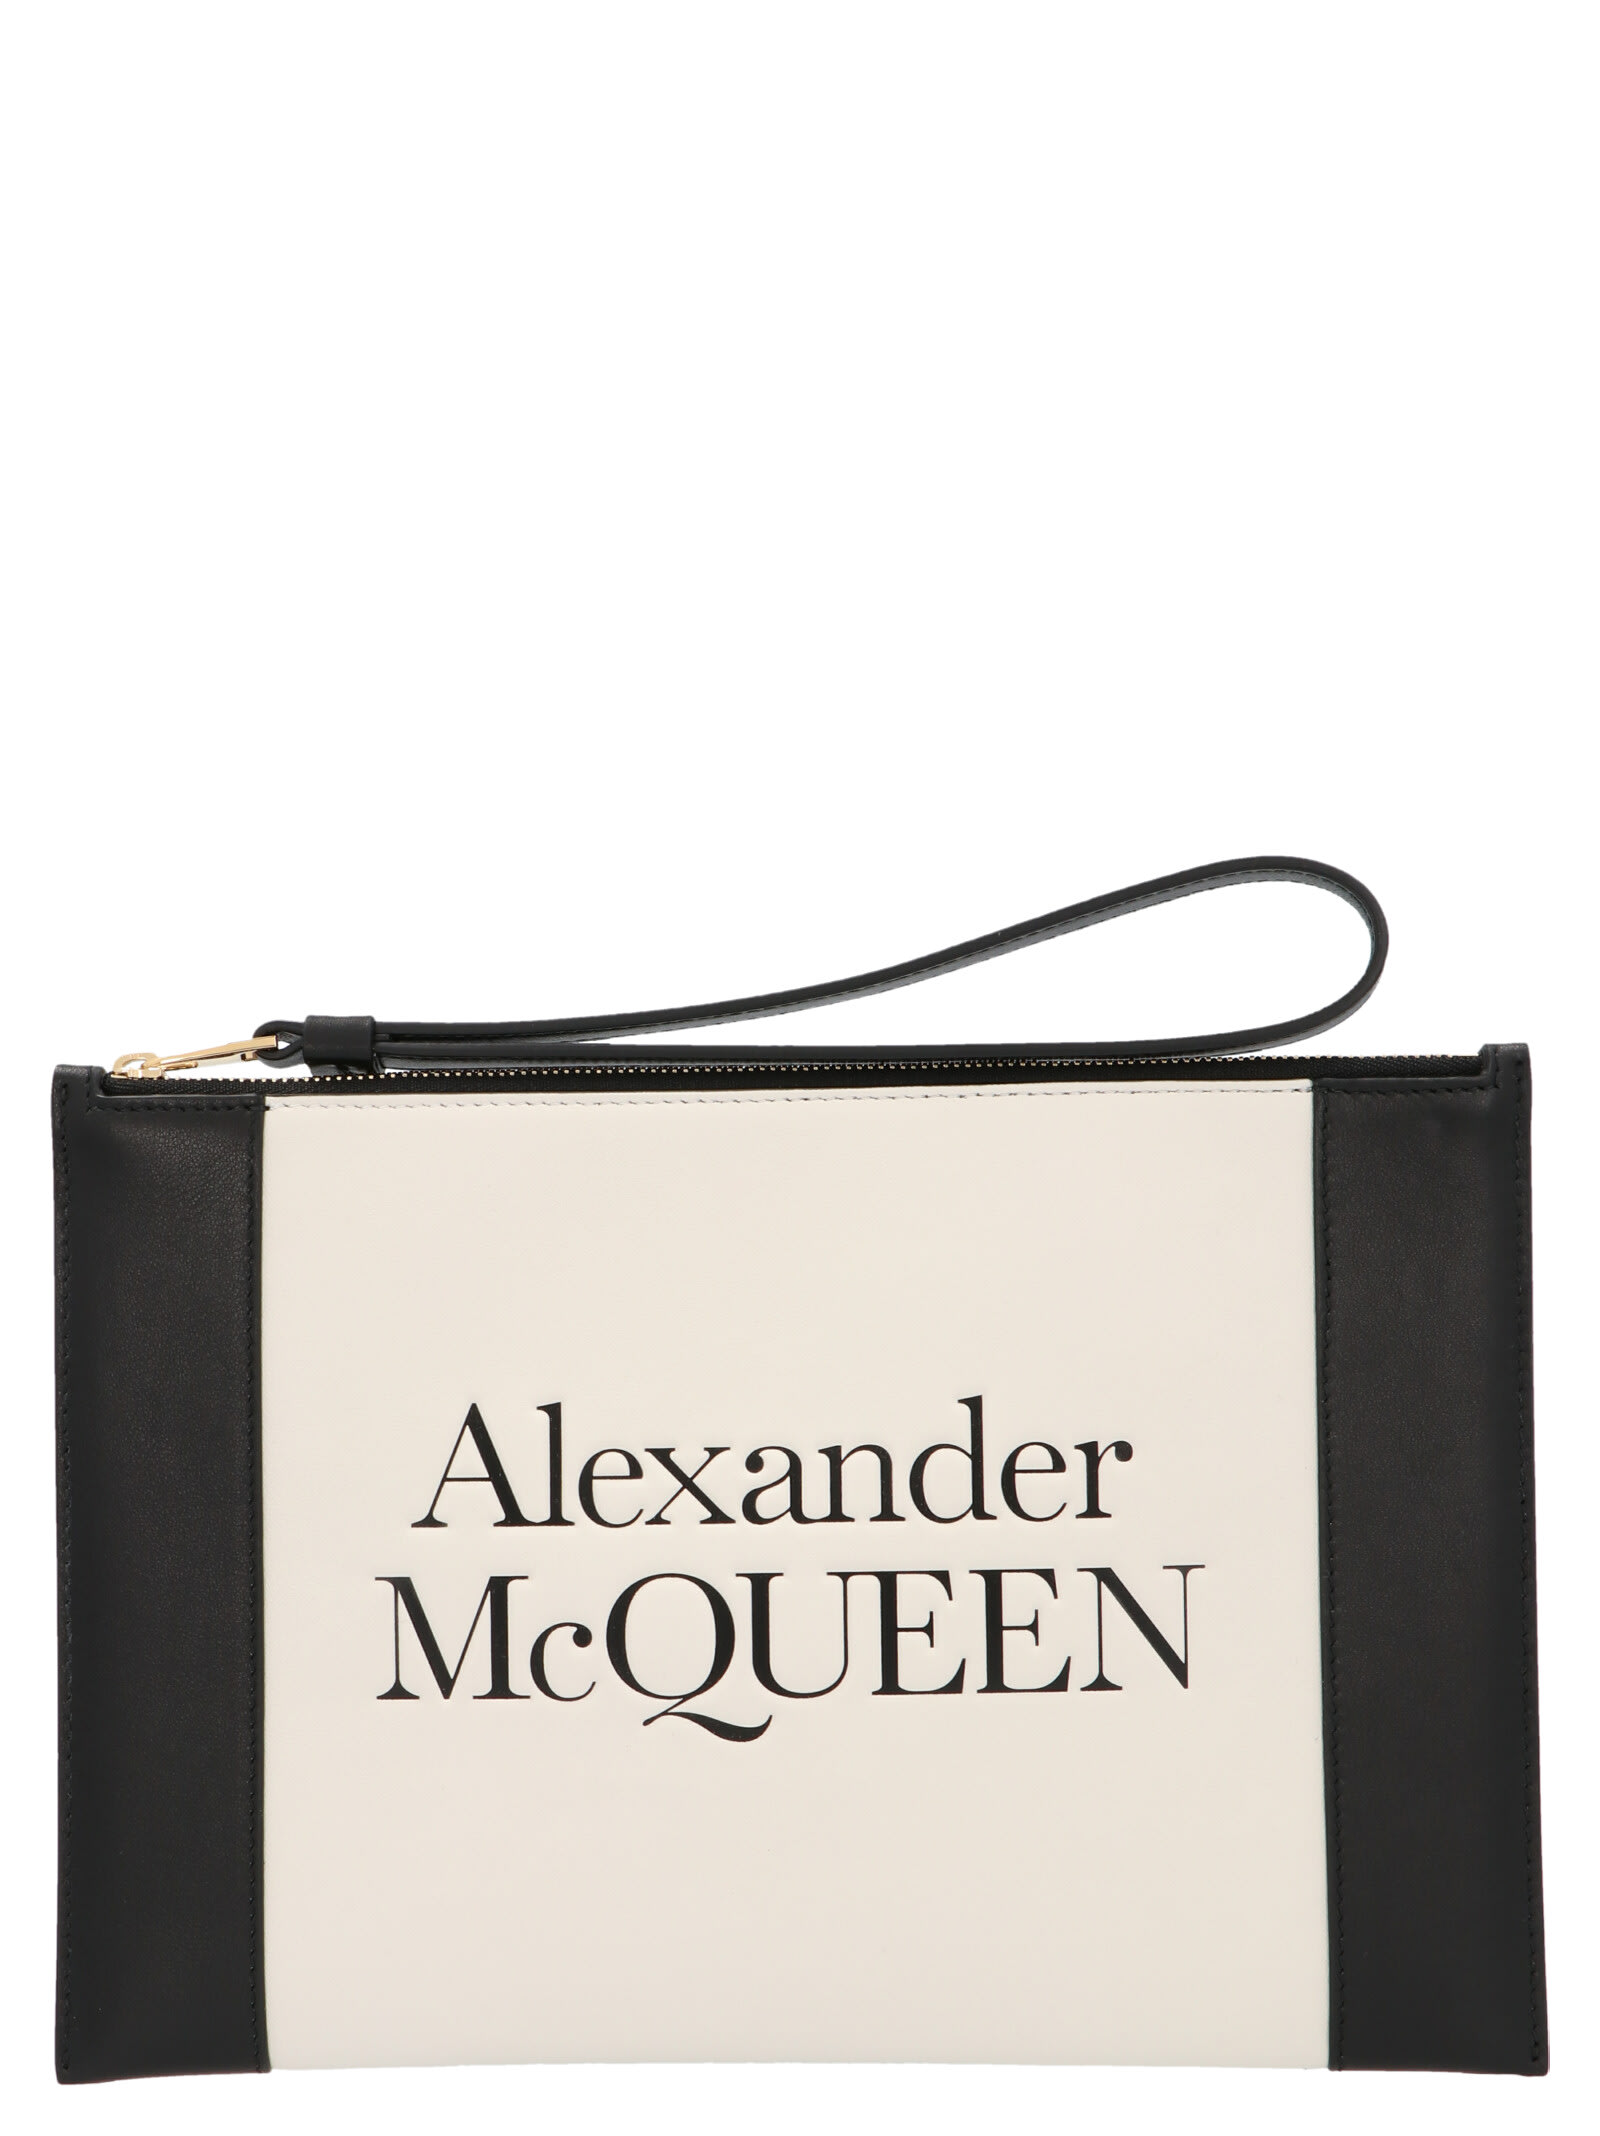 Alexander McQueen signature Bag